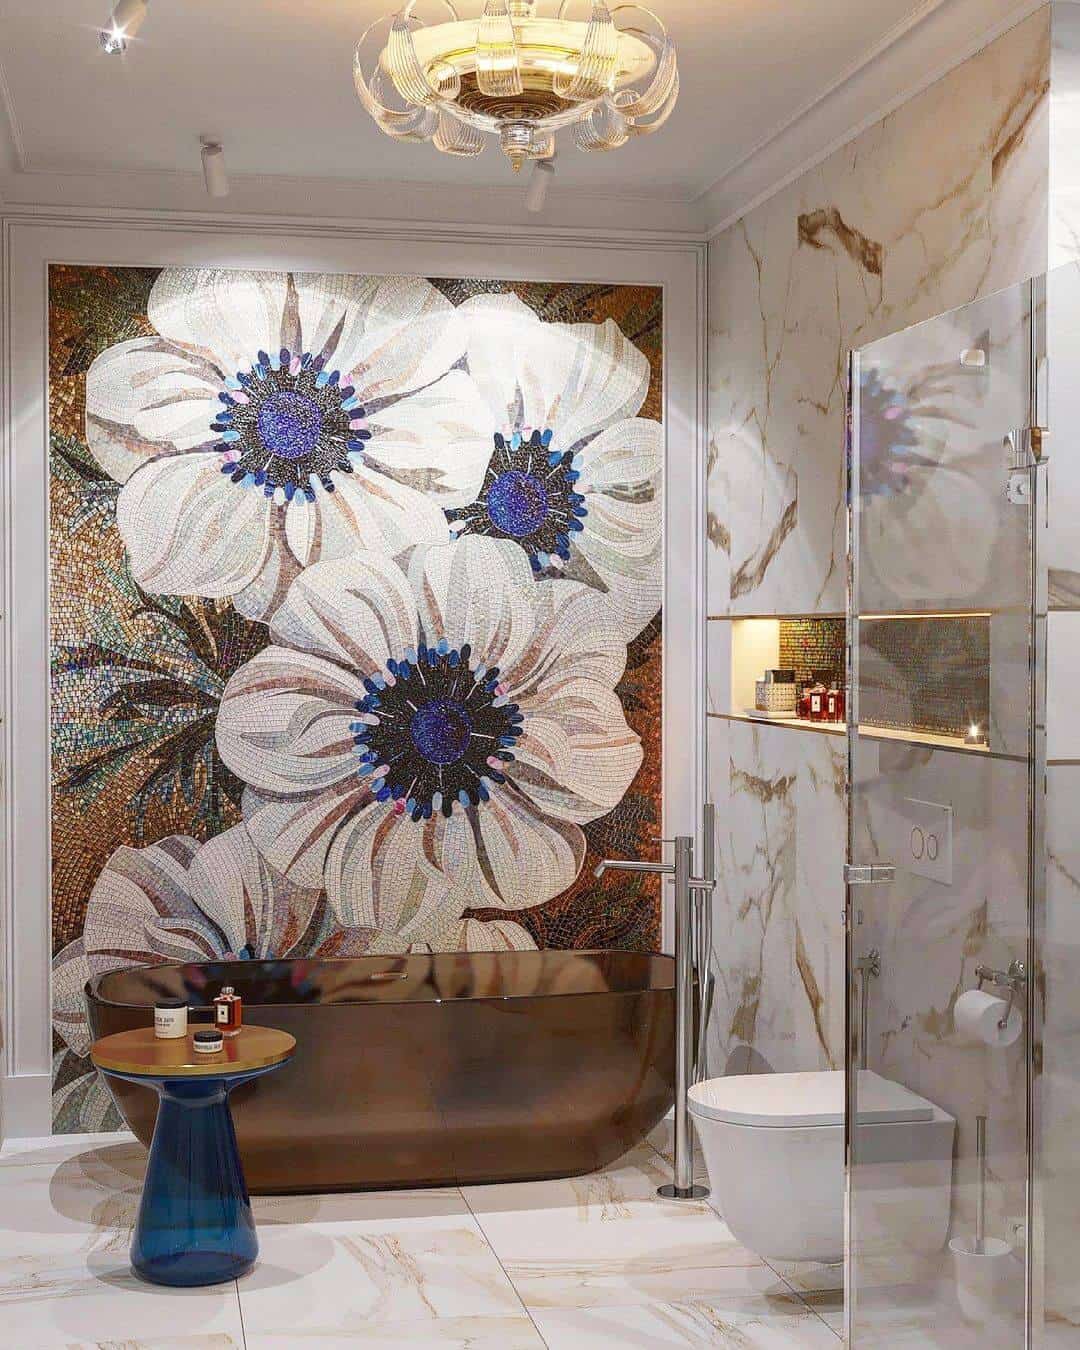 Floral washroom design with fixtures